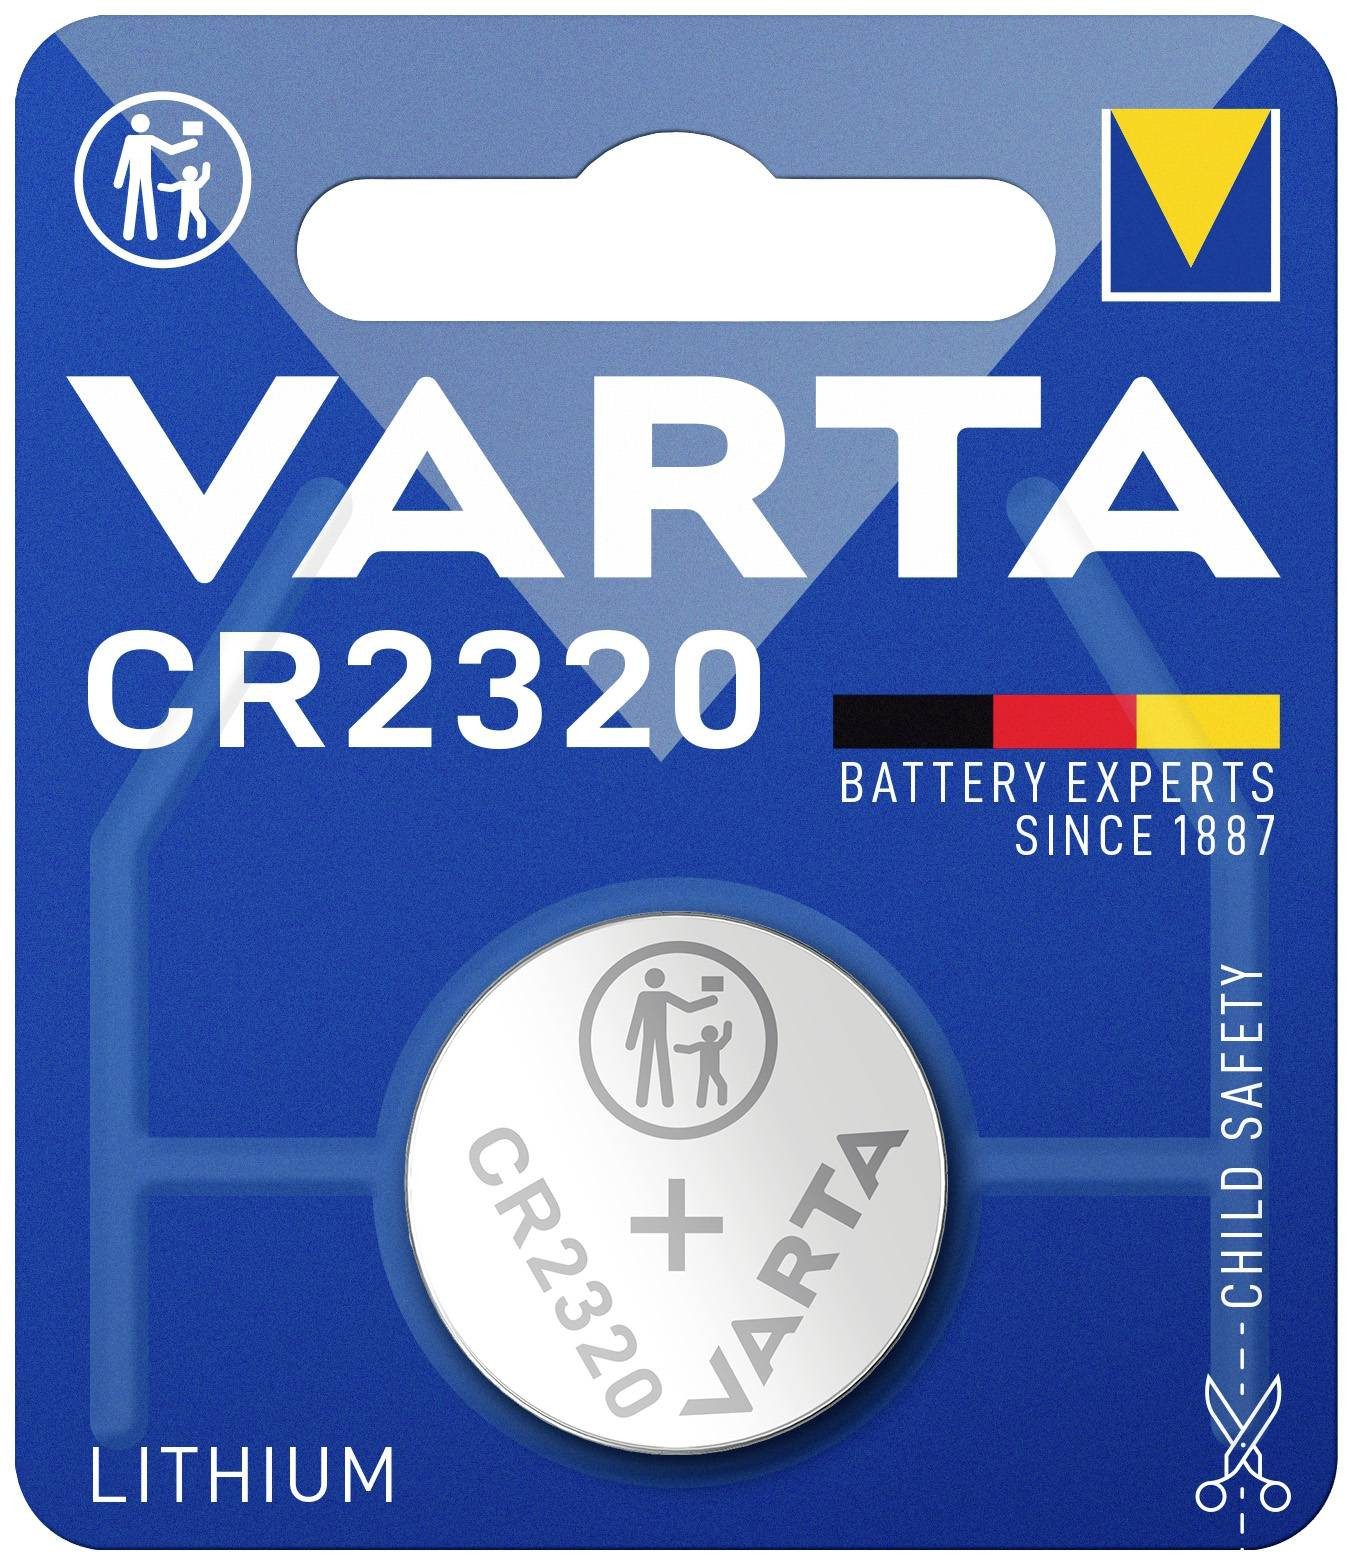 VARTA VARTA Knopfzelle CR 2320 Lithium Varta Professional Electronics CR2... Knopfzelle